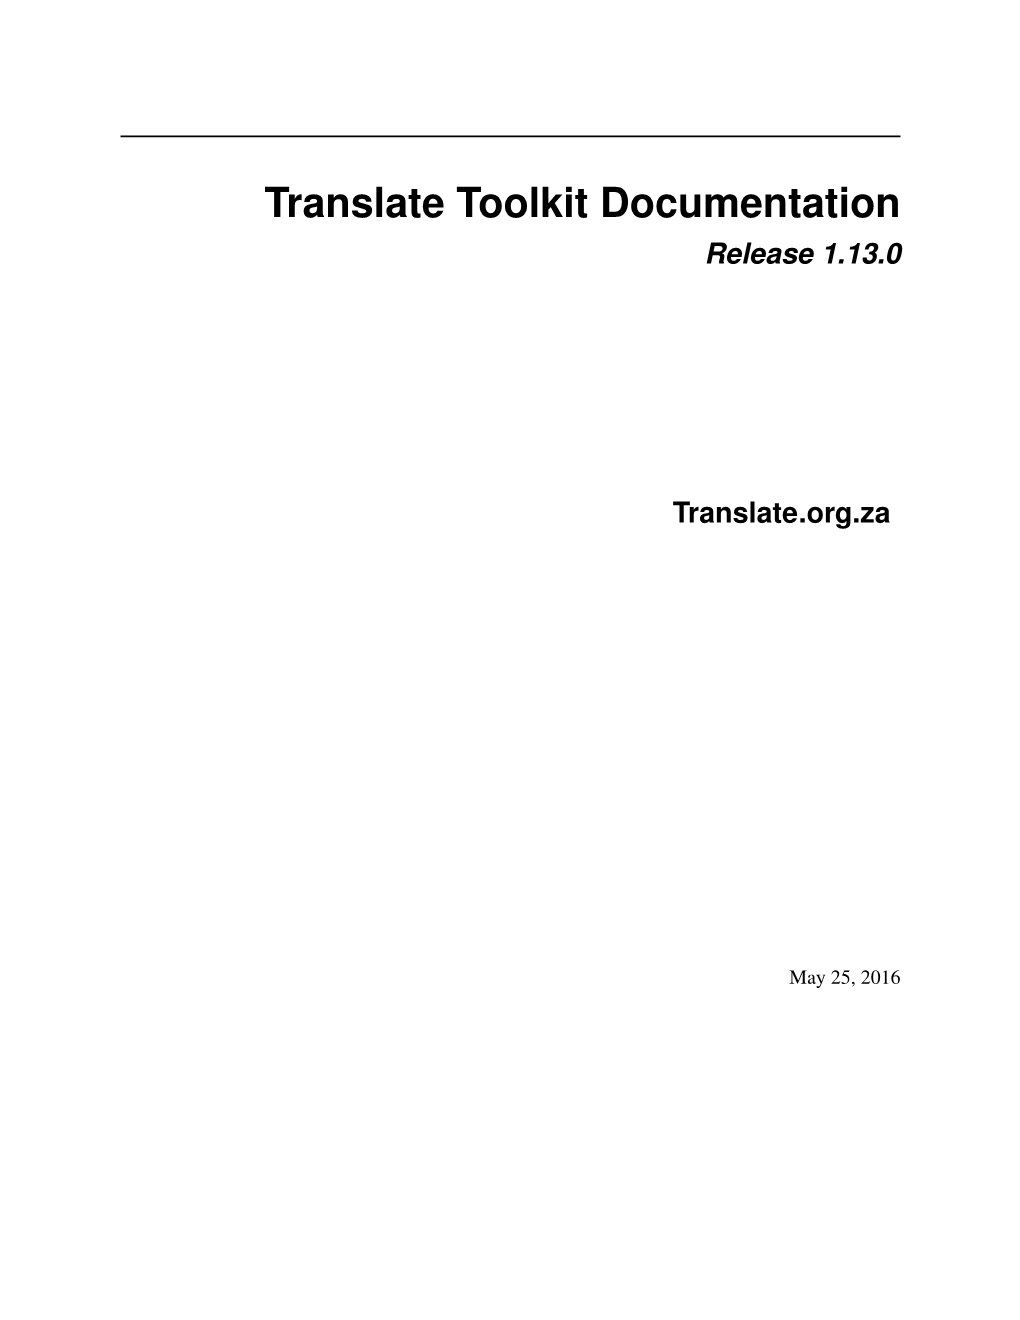 Translate Toolkit Documentation Release 1.13.0